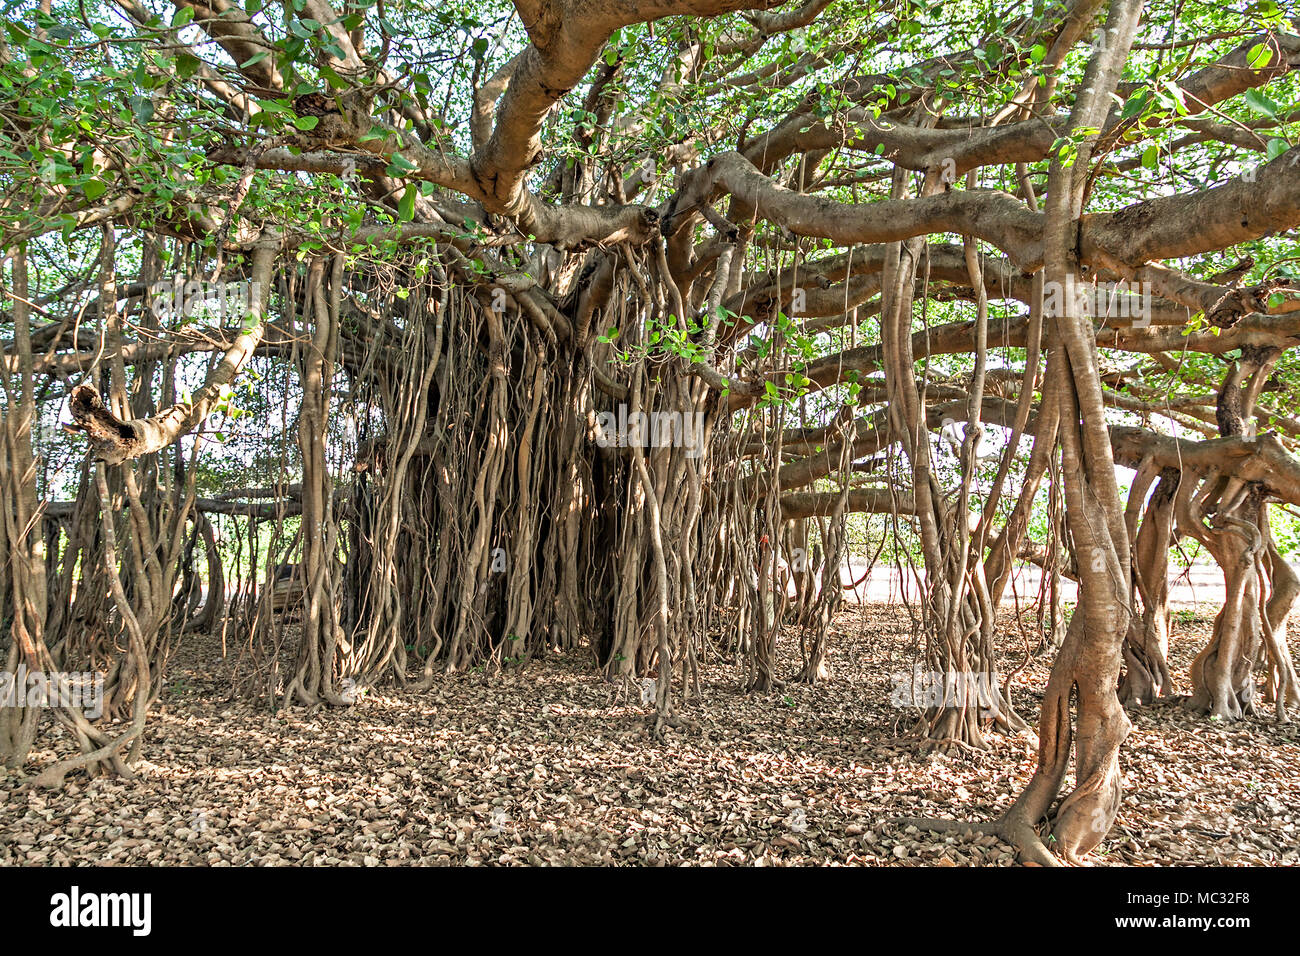 Very big banyan tree in the jungle Stock Photo